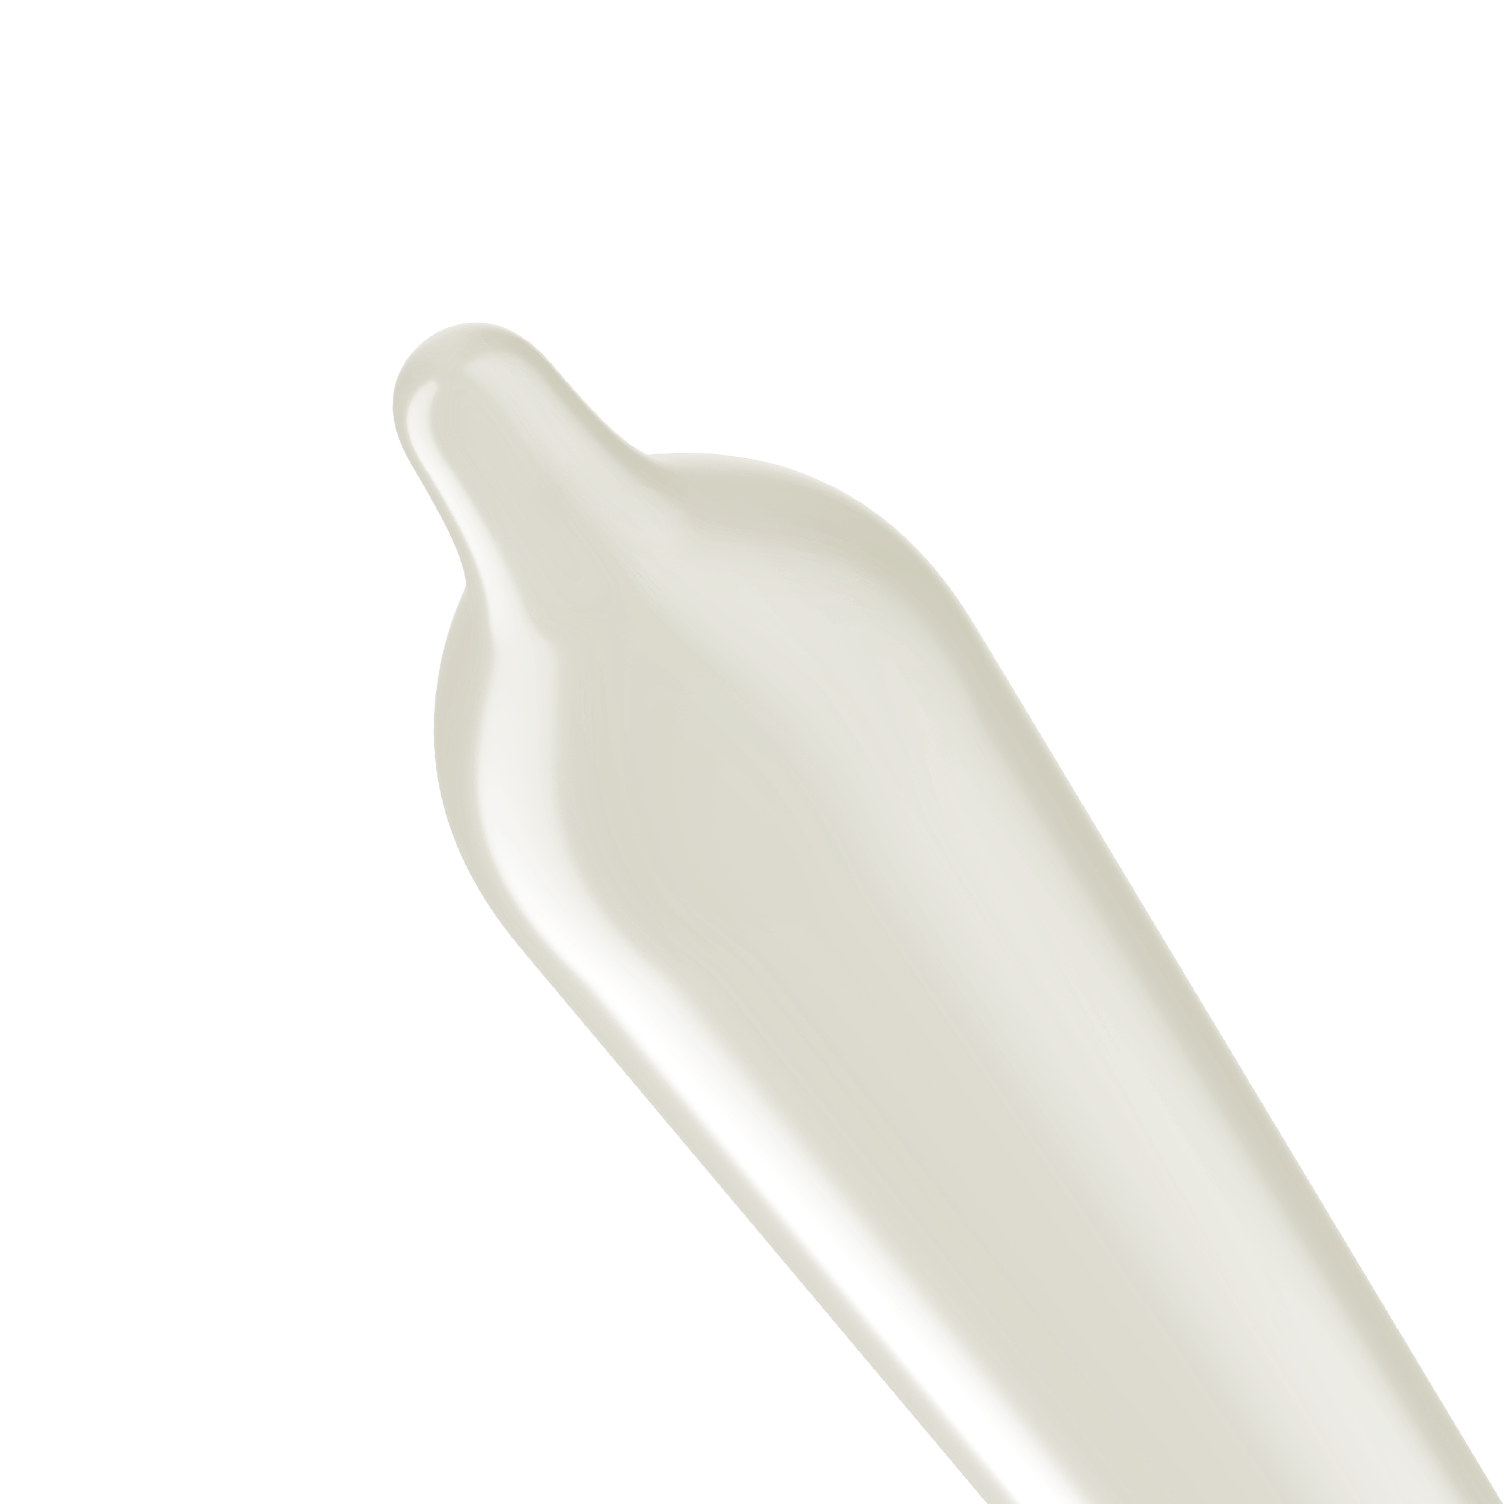 Trojan Ultra Thin Spermicidal thin straight shaped condom with reservoir tip.